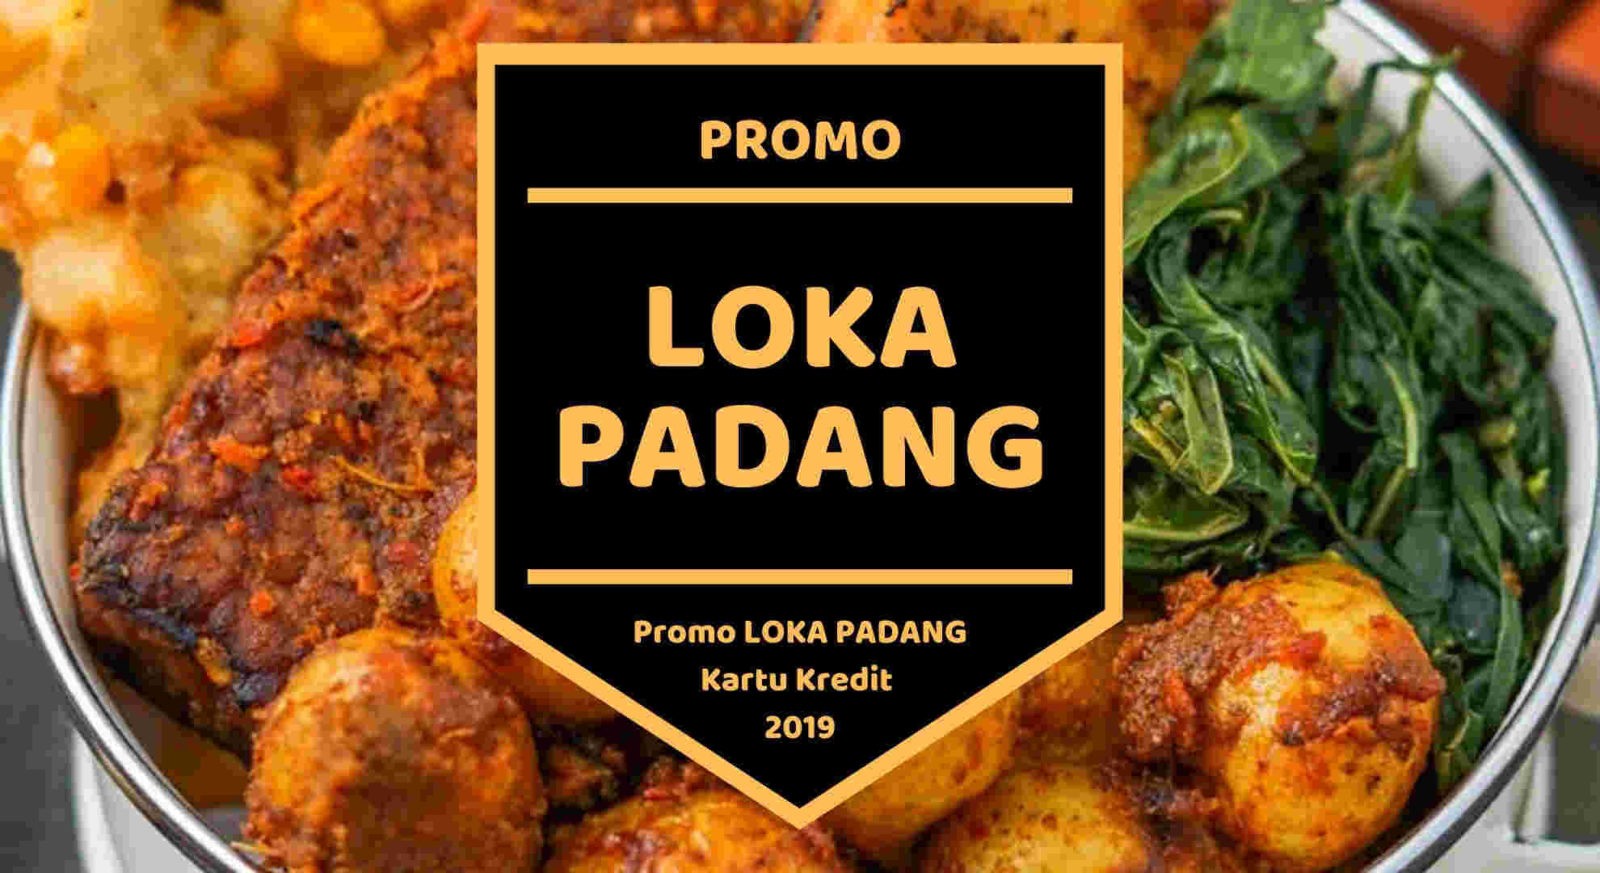 Promo Loka Padang